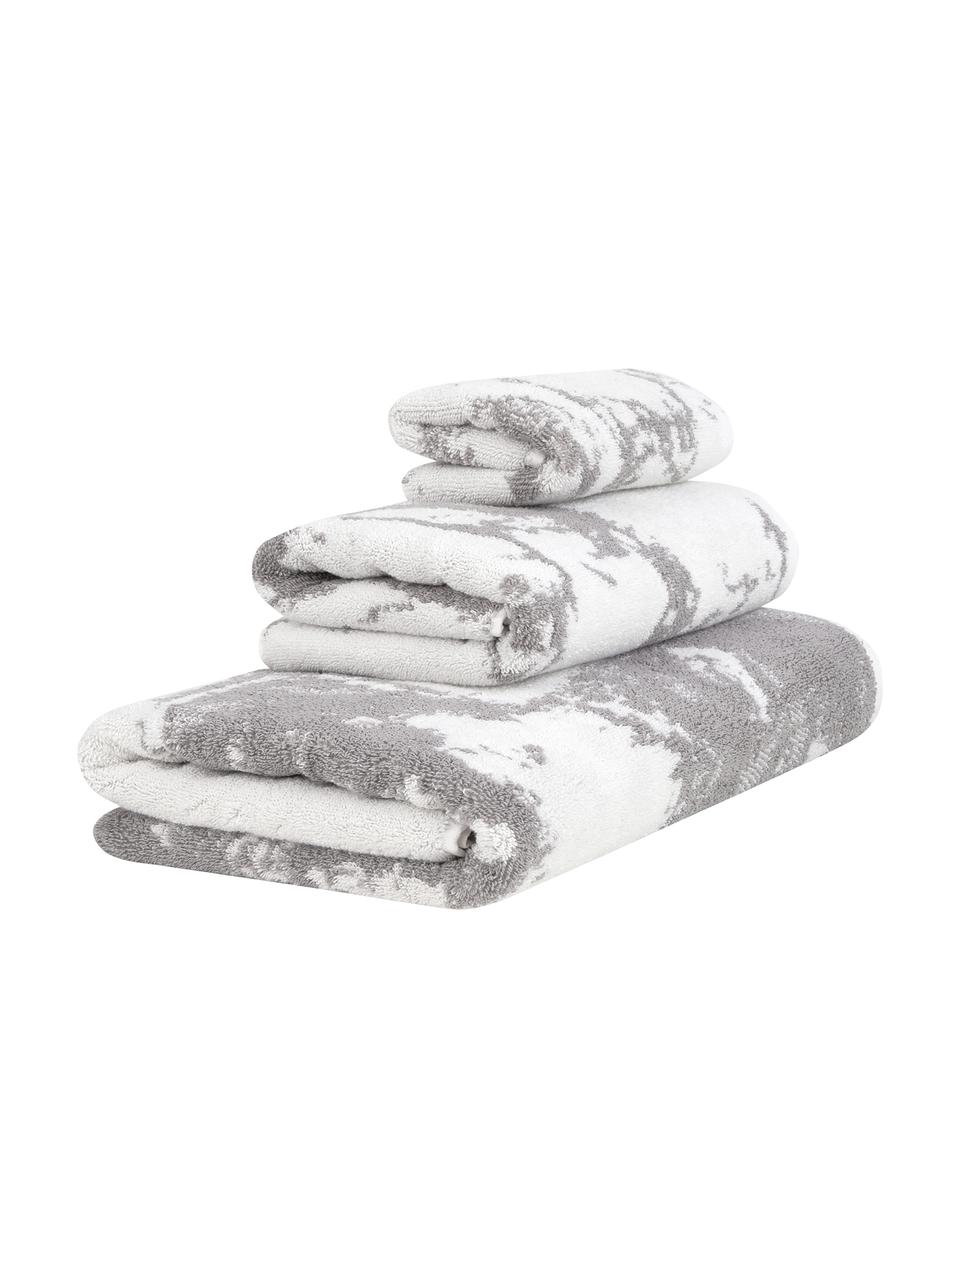 Sada ručníků s mramorovým potiskem Malin, 3 díly, Šedá, krémově bílá, Sada s různými velikostmi